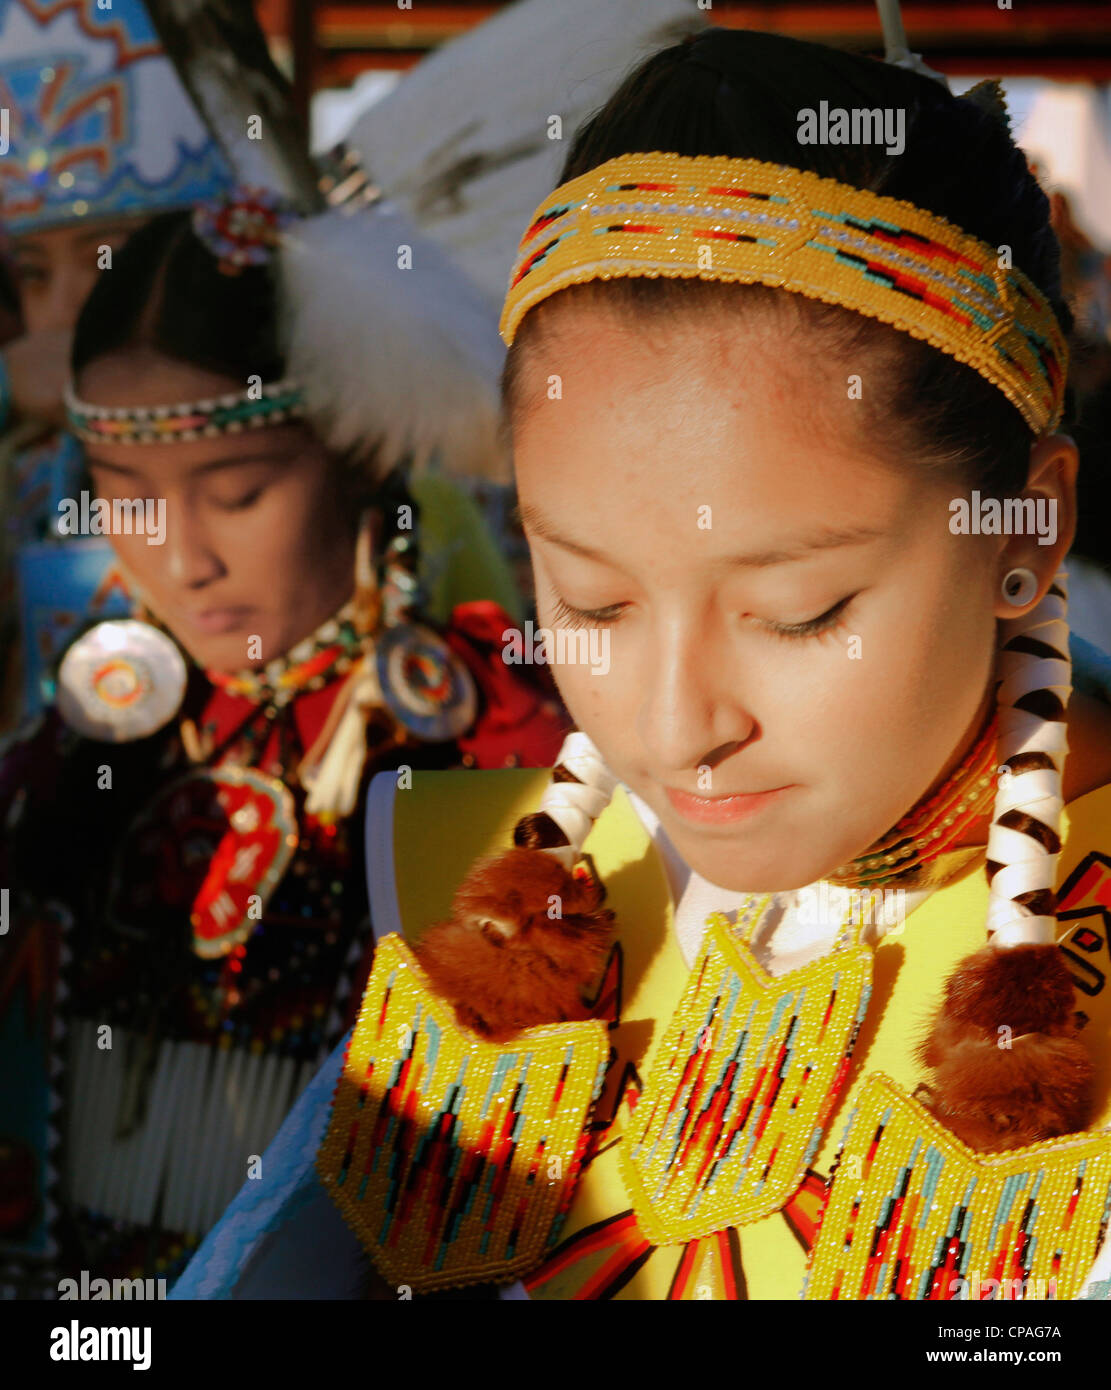 Stati Uniti d'America, Idaho, Fort Hall. I partecipanti al powwows, Shoshone-Bannock annuale Festival, Fort Hall Reservation, Idaho Foto Stock